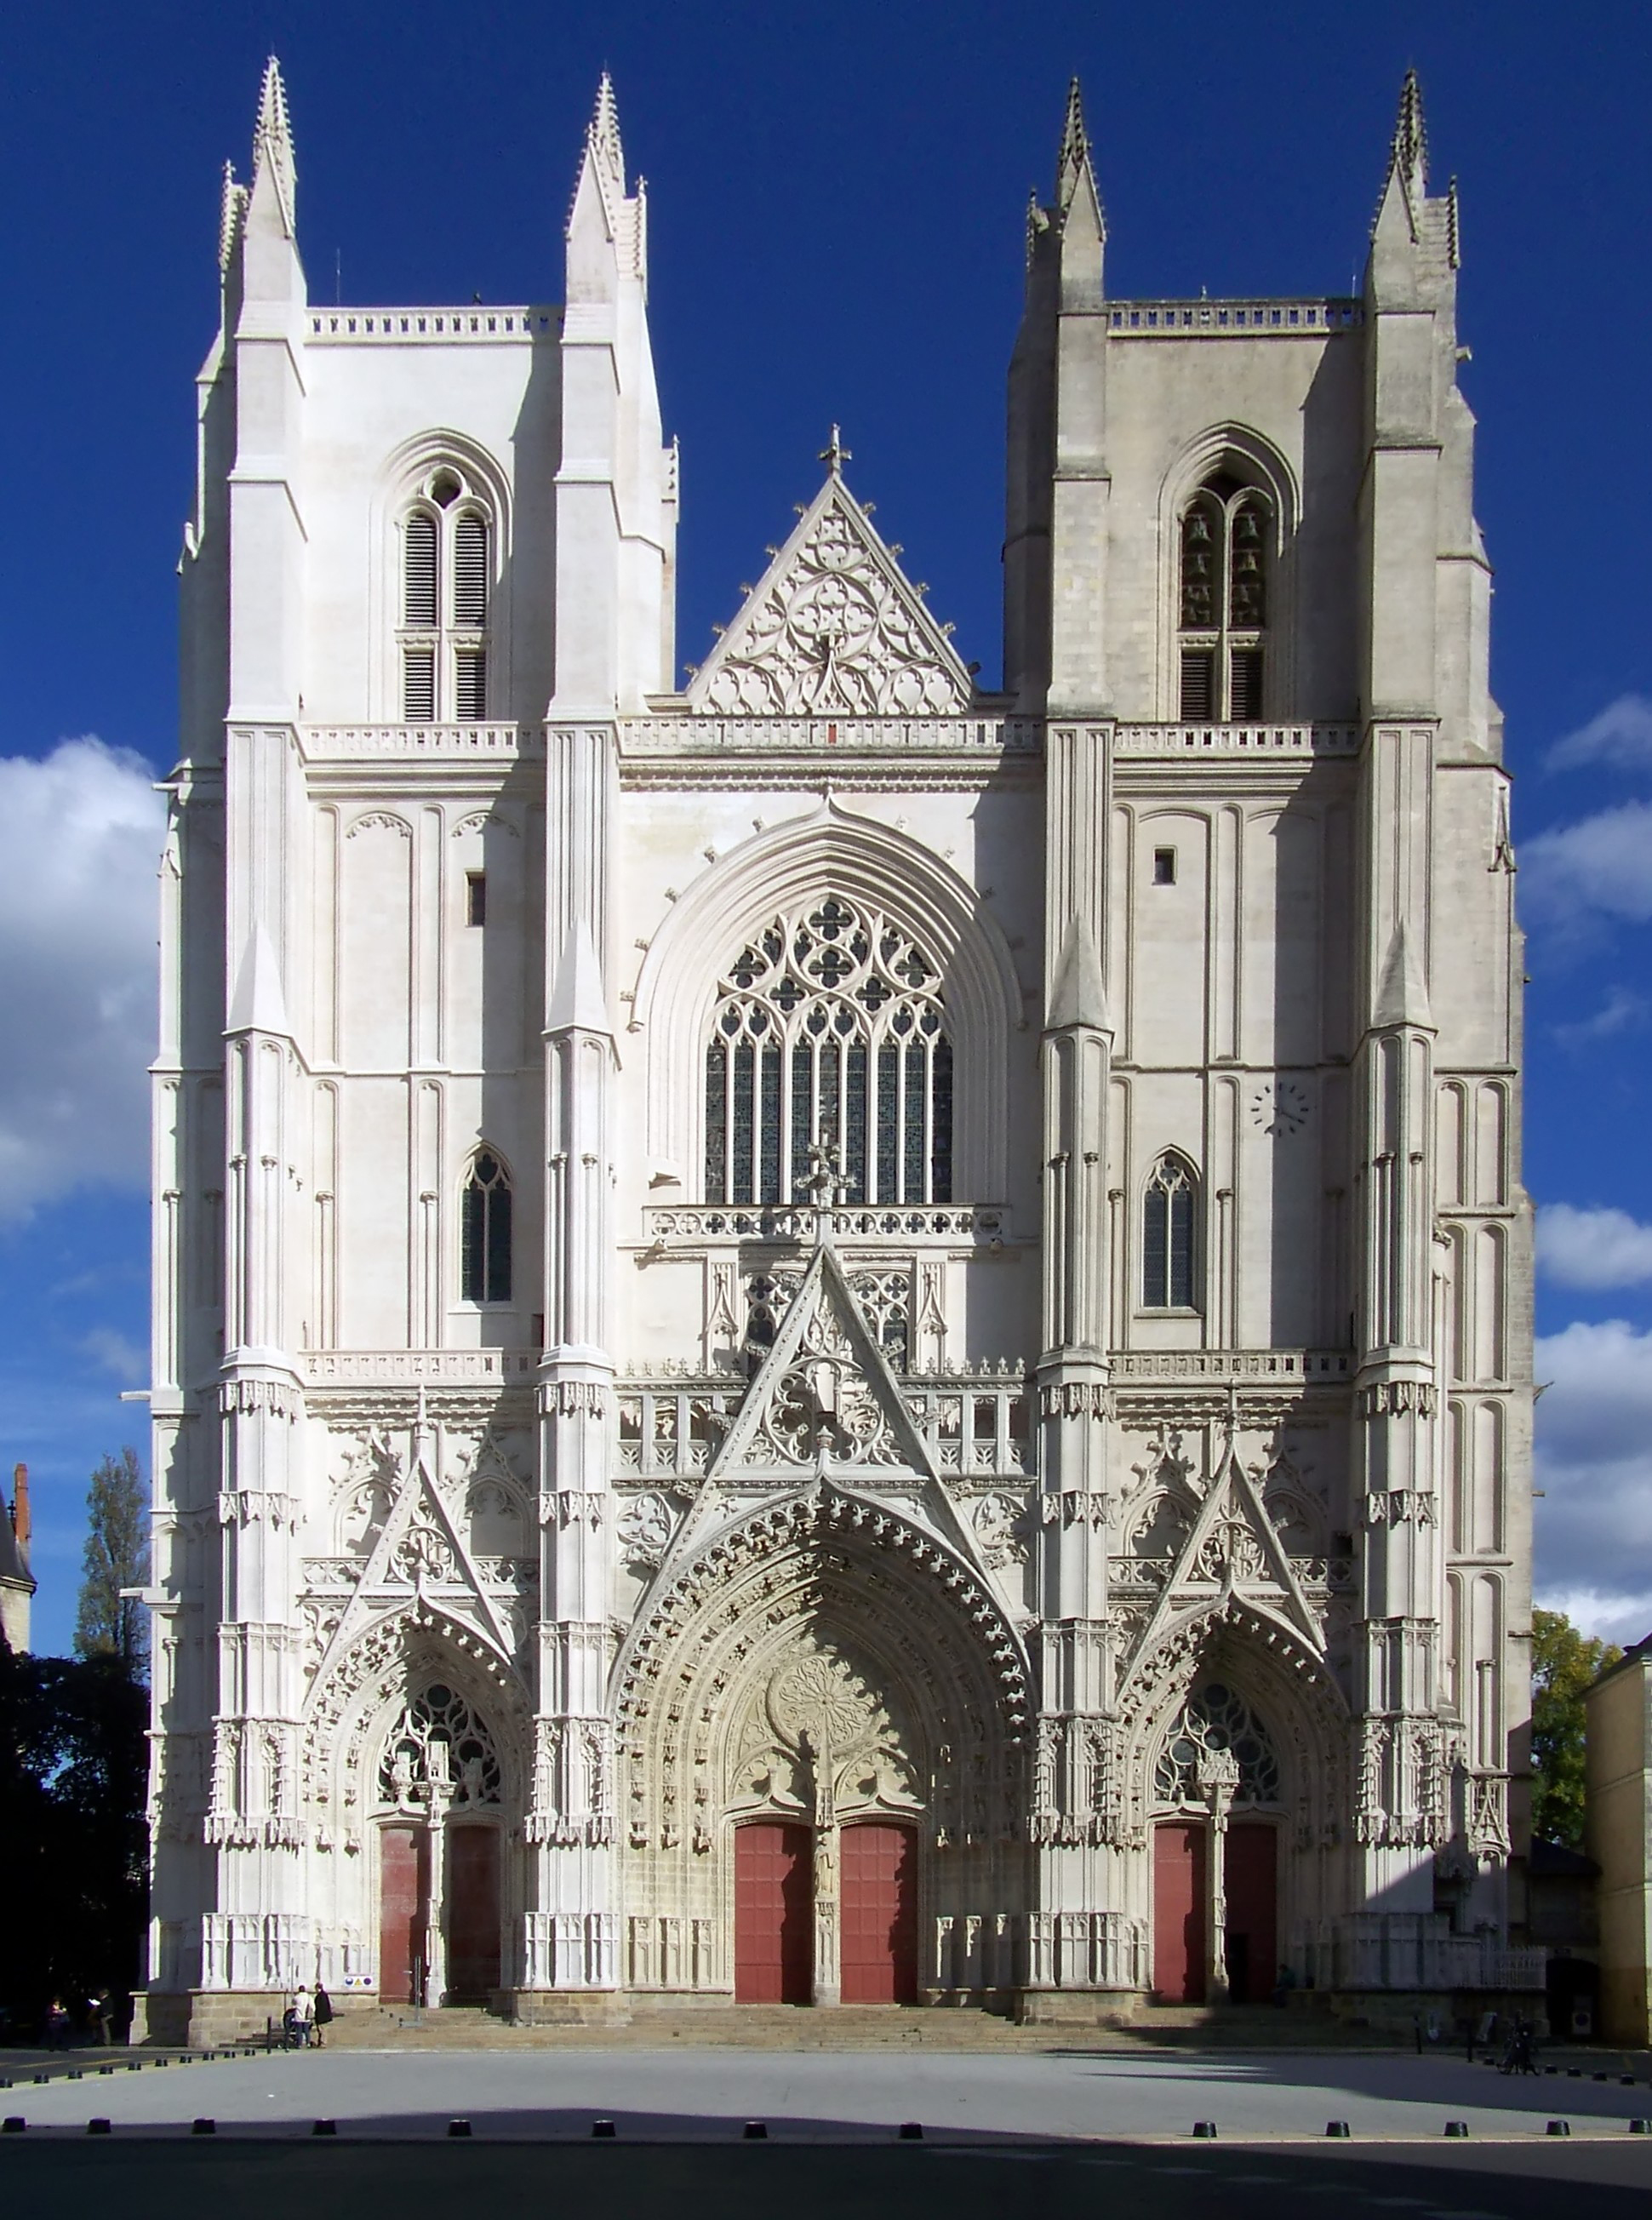 35 engaging photos of Nantes Cathedral, France | BOOMSbeat